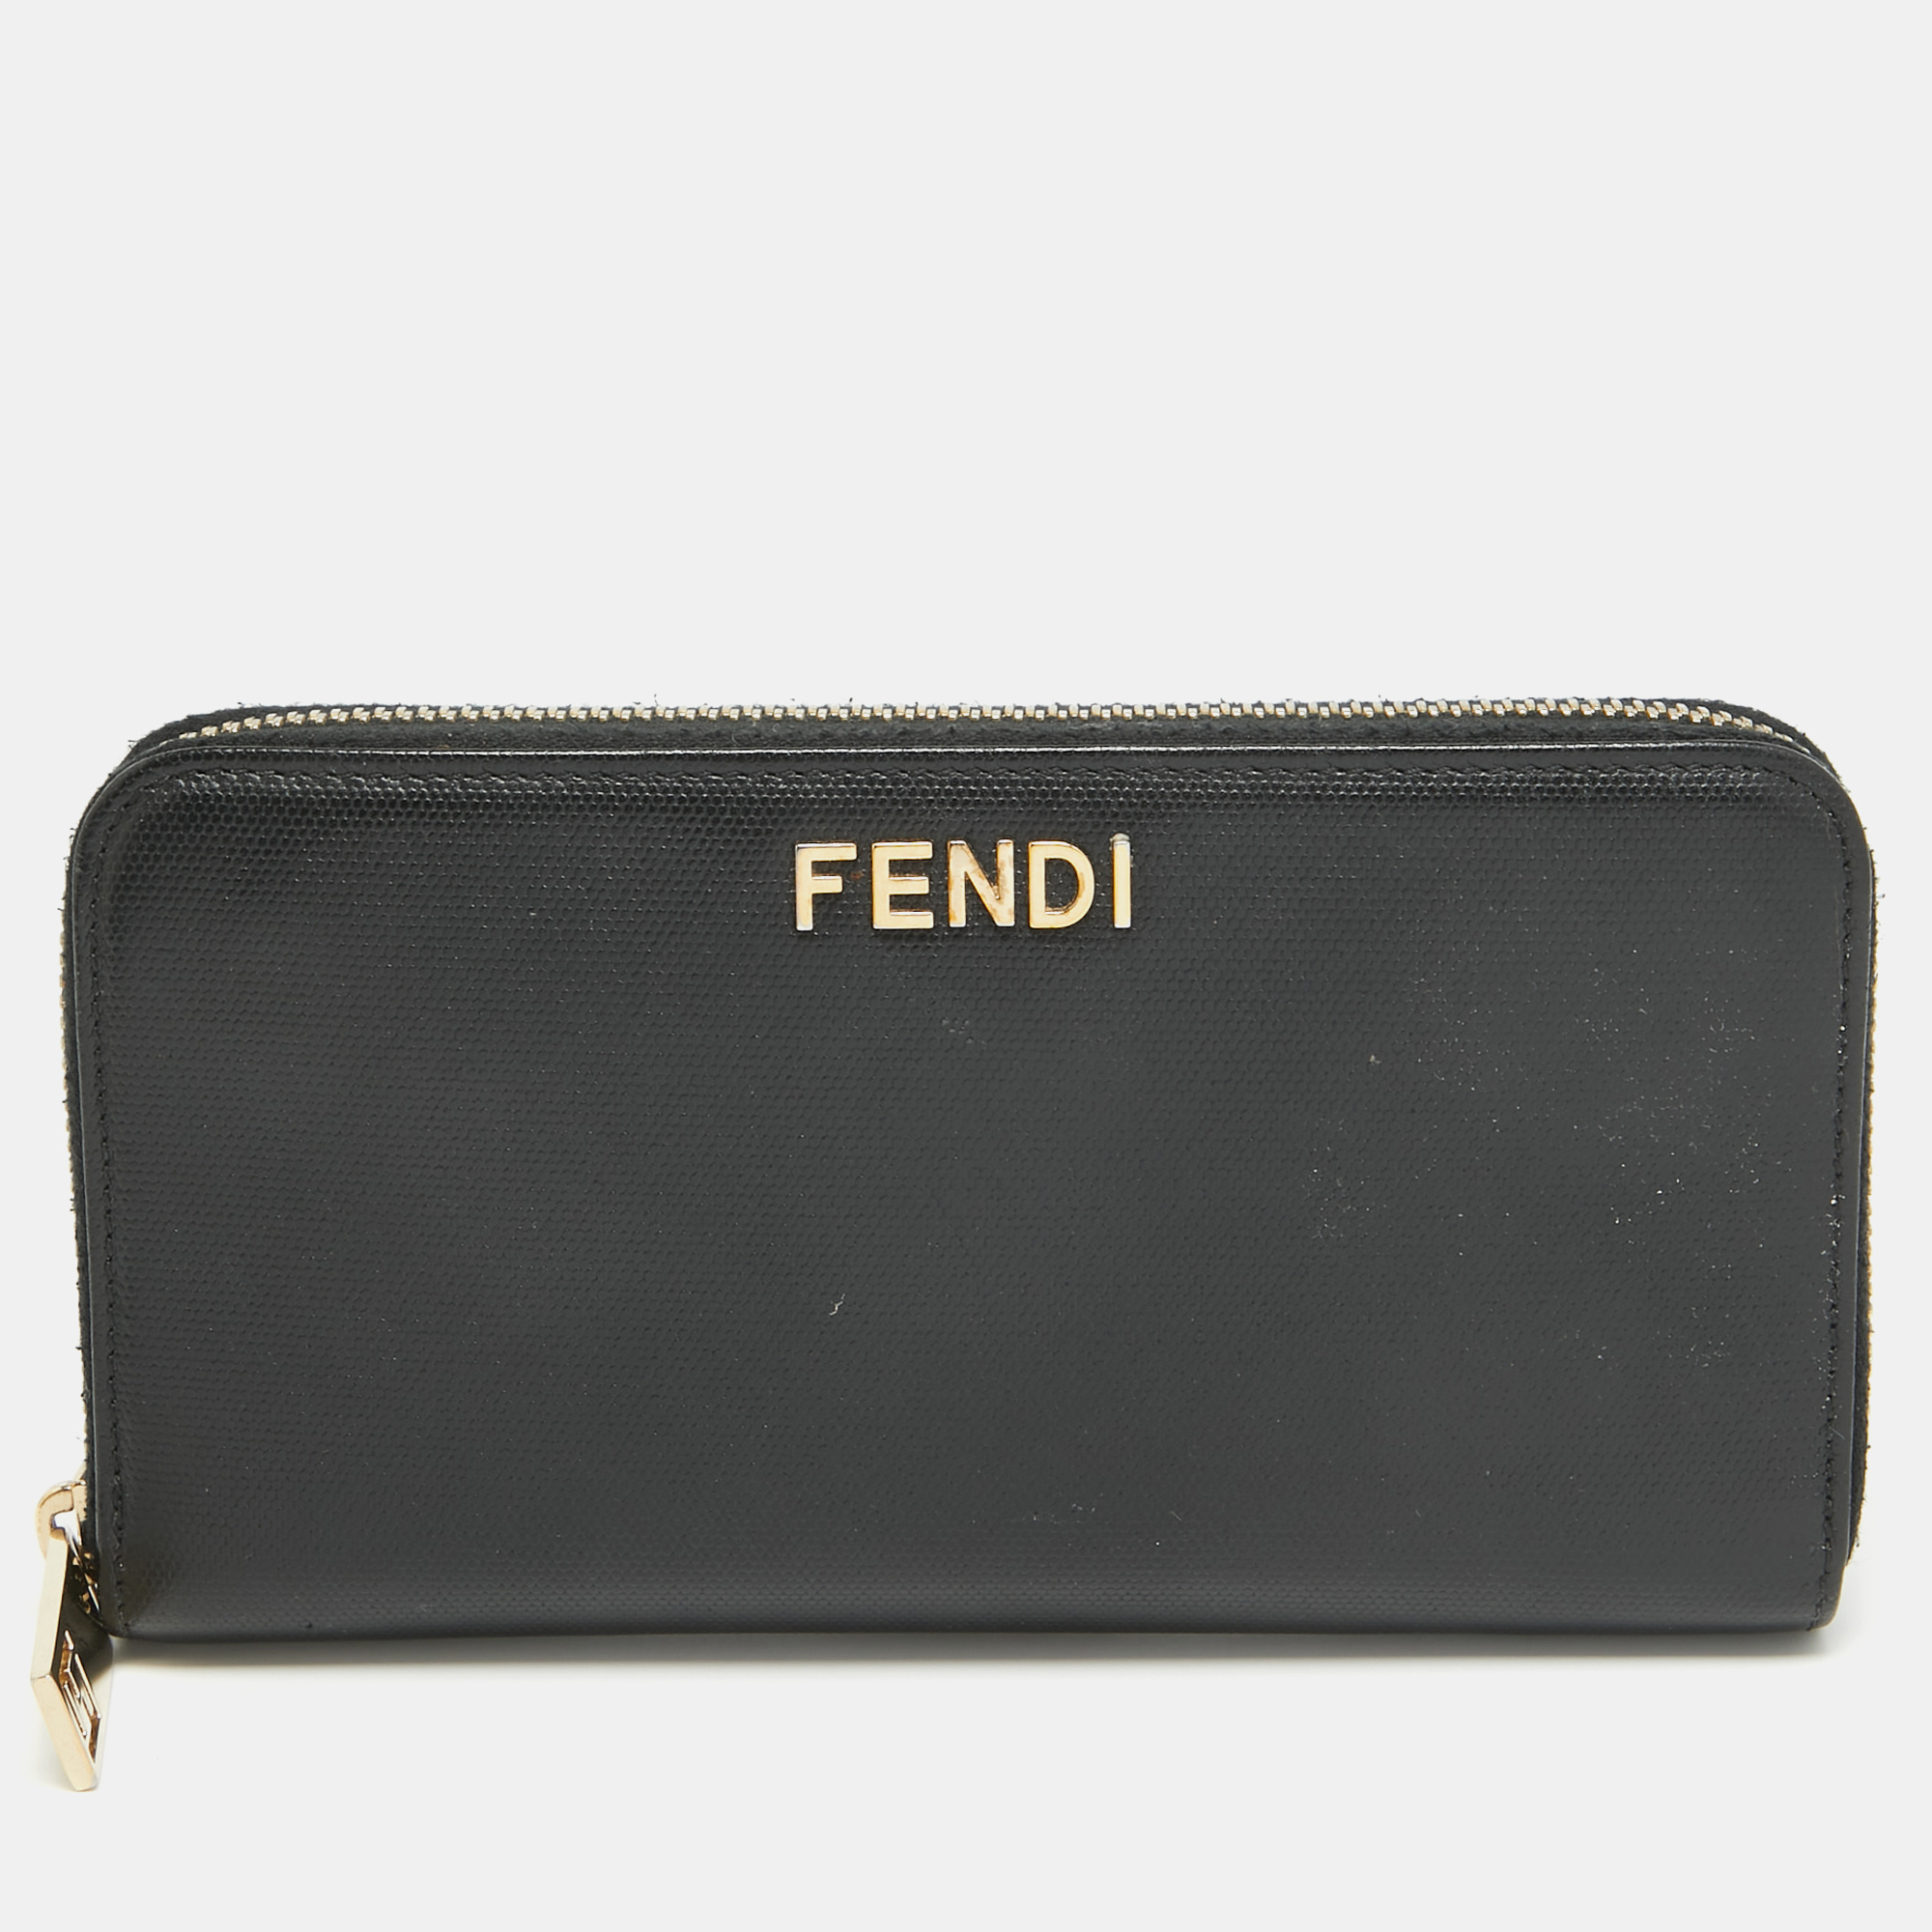 Fendi black leather logo zip around continental wallet